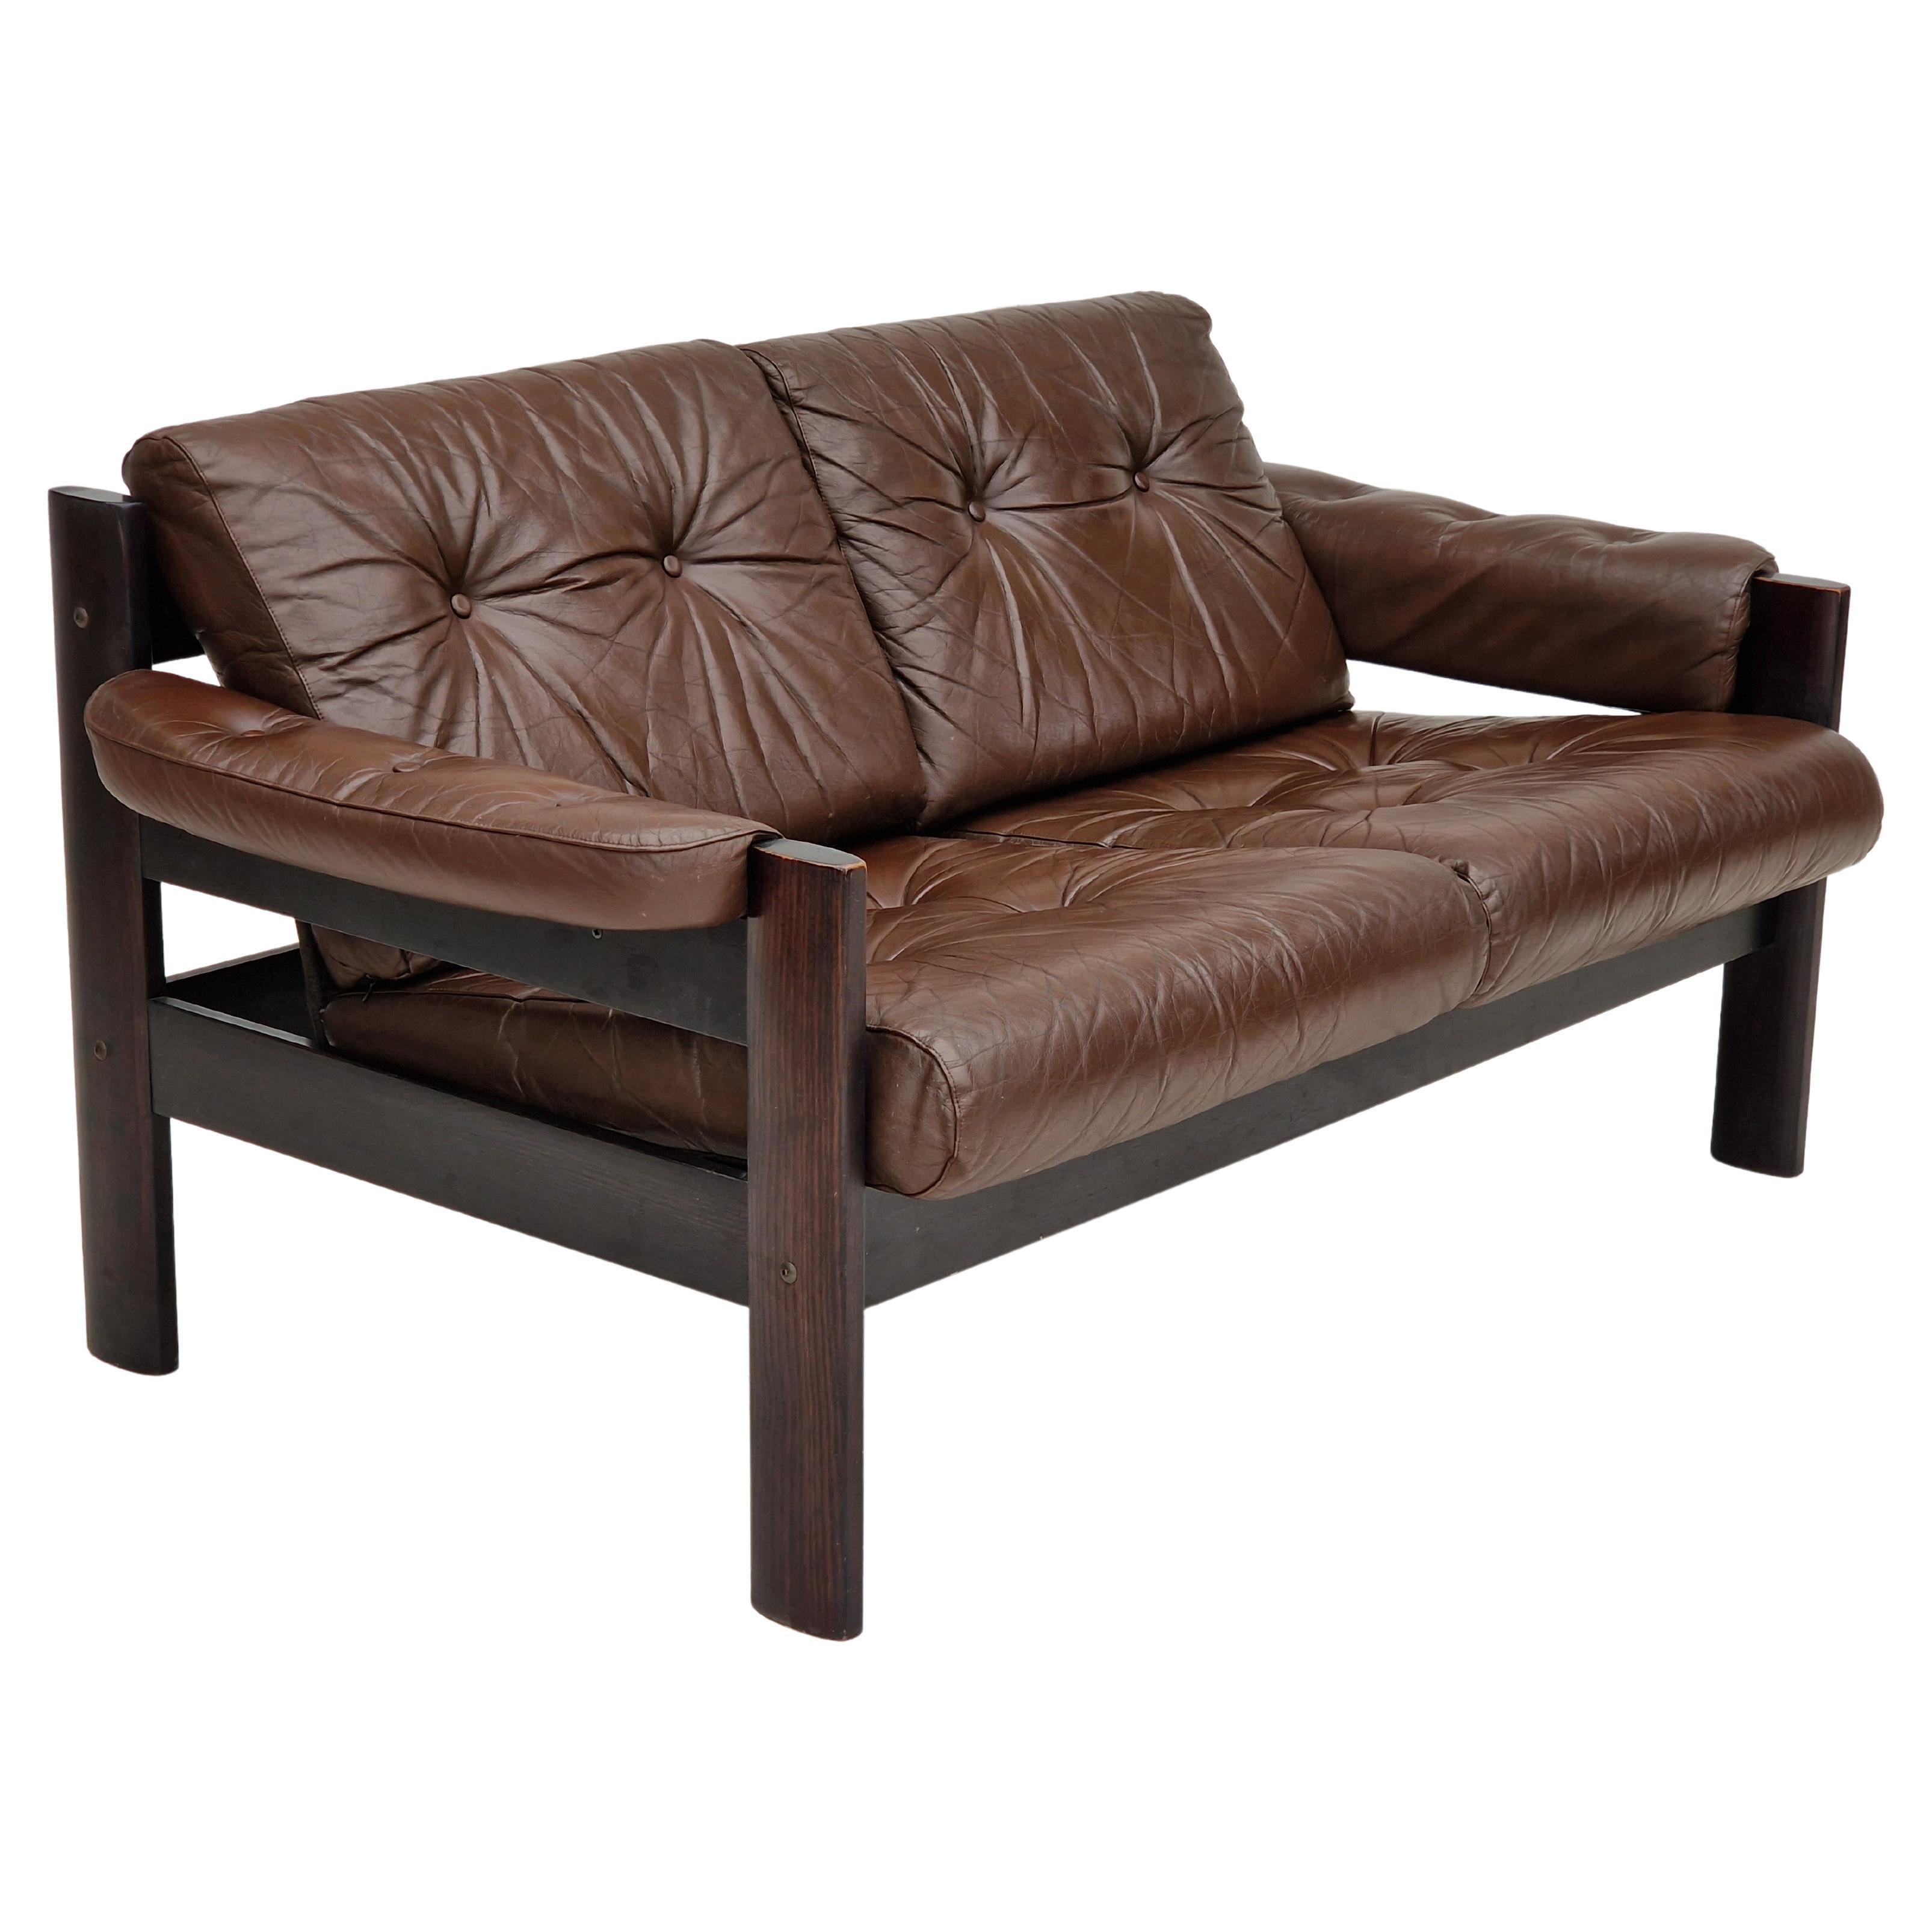 1970s, Scandinavian 2-Seater Sofa, Original Condition, Brown Leather